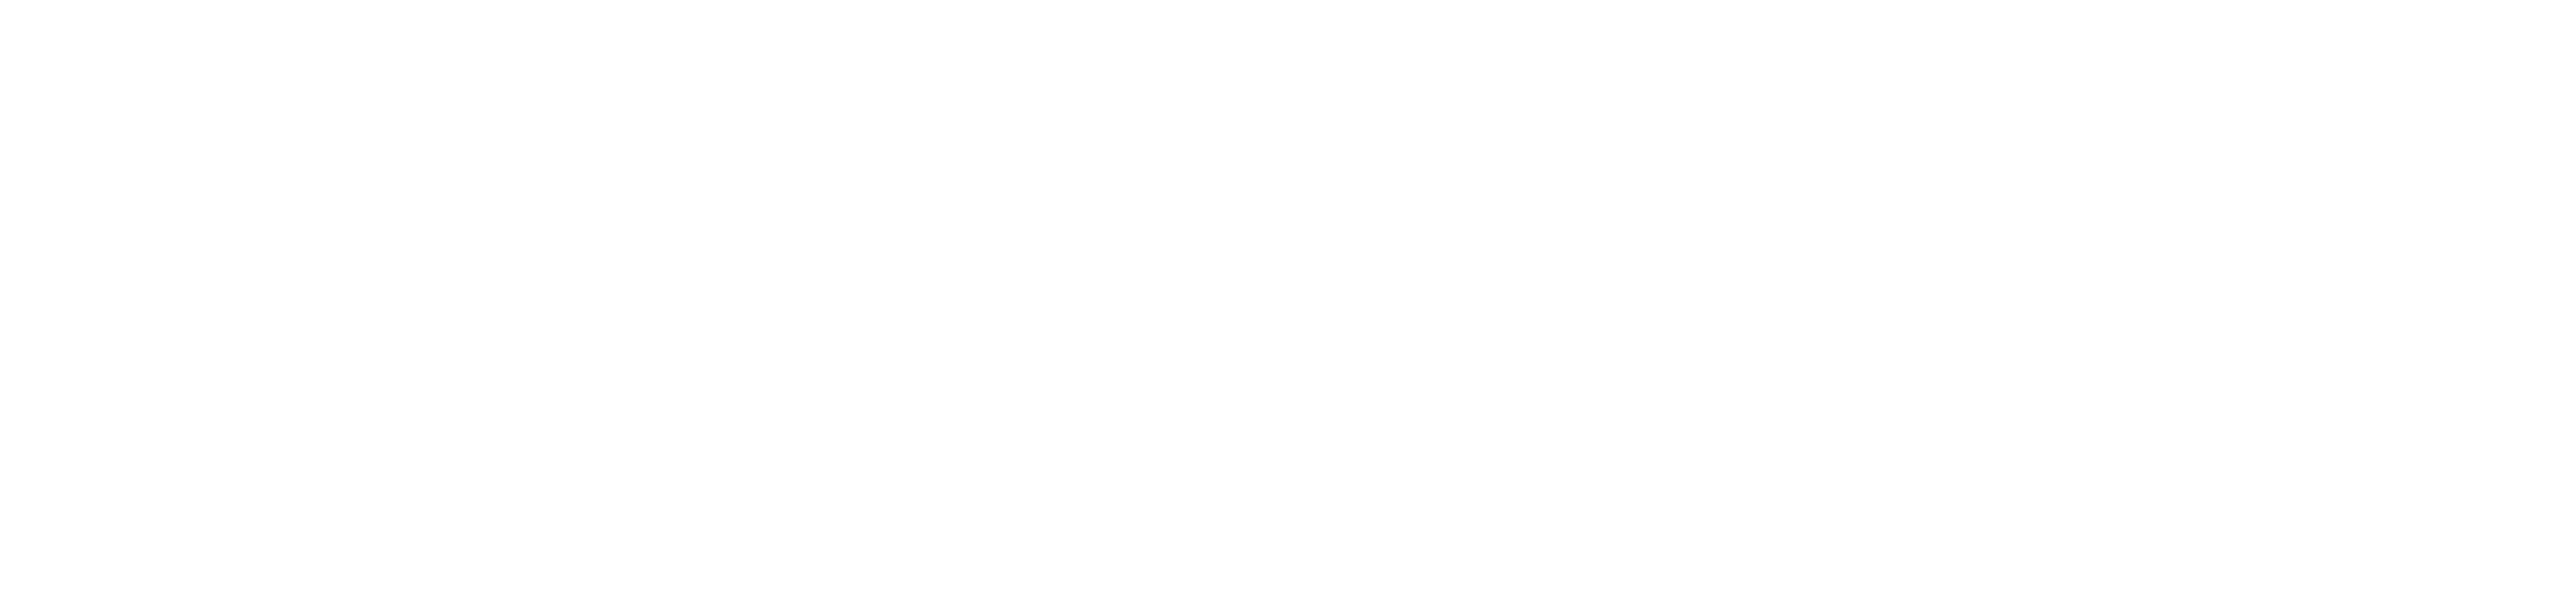 AASP footer logo